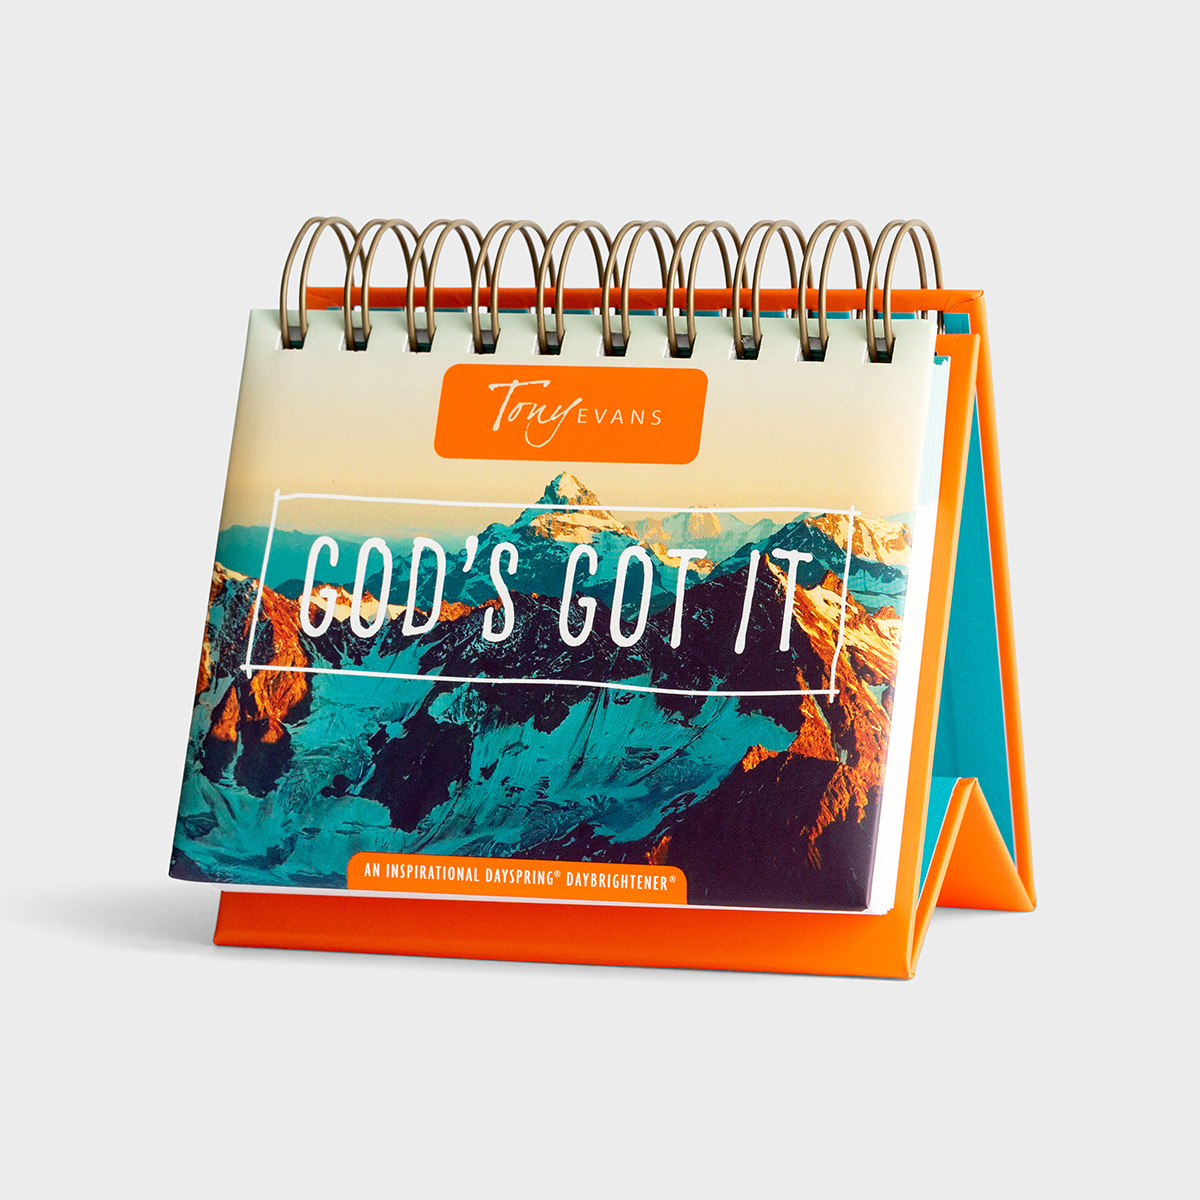 Tony Evans - God's Got It - 365 Day Perpetual Calendar